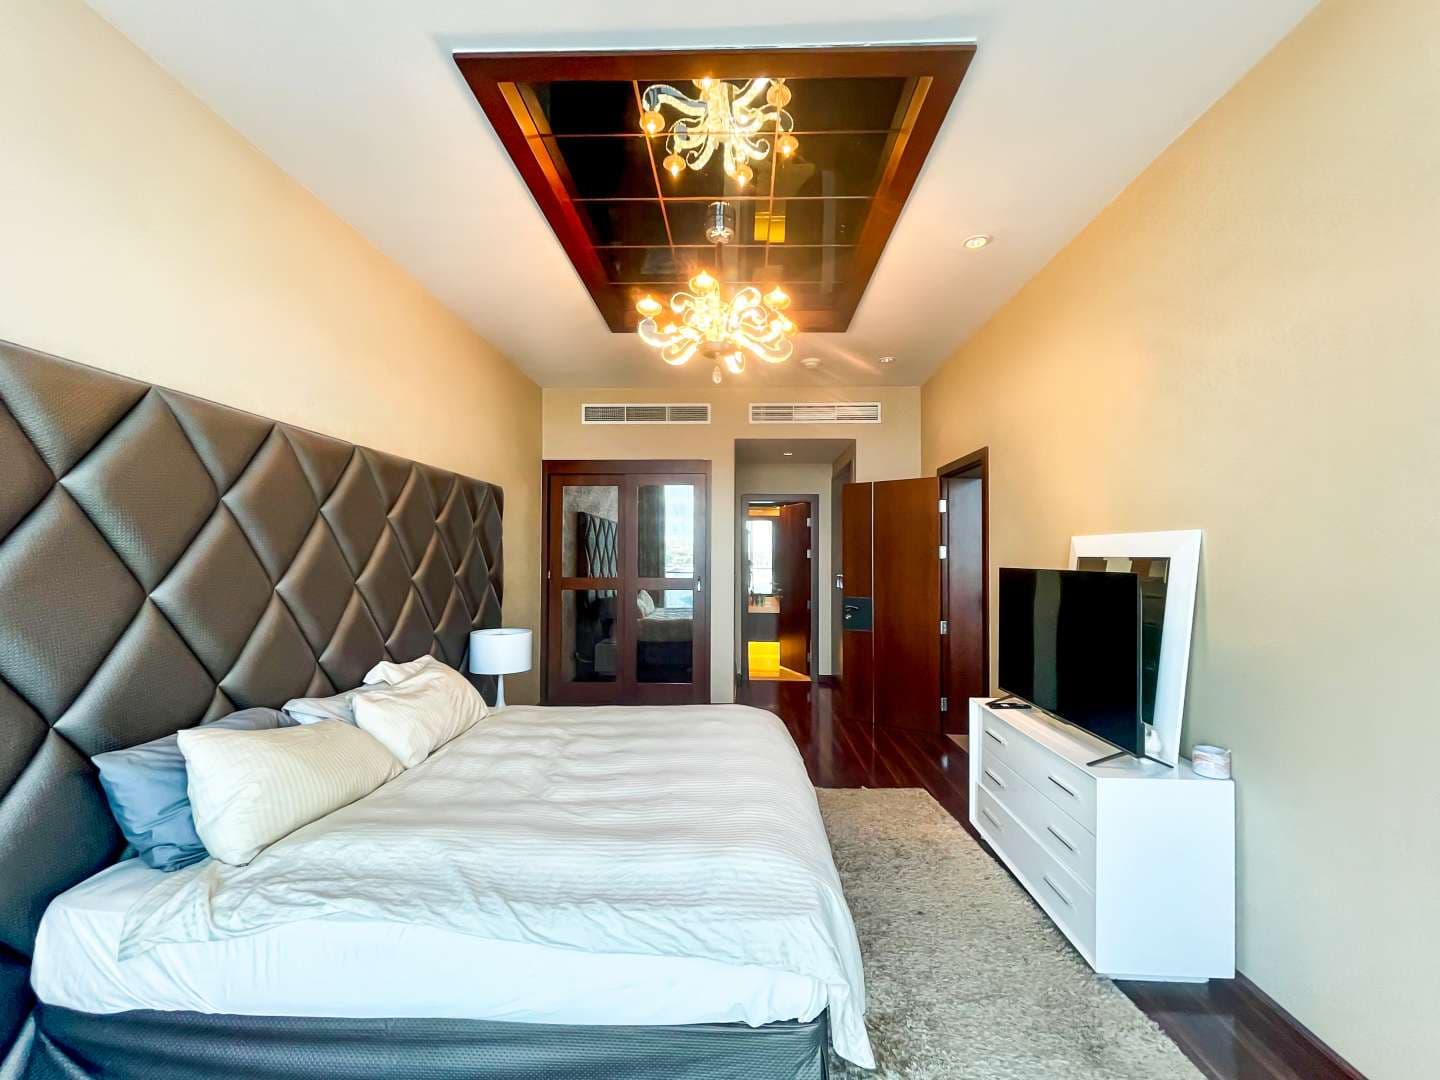 2 Bedroom Apartment For Rent Oceana Pacific Lp10721 E11f18f35b74680.jpg